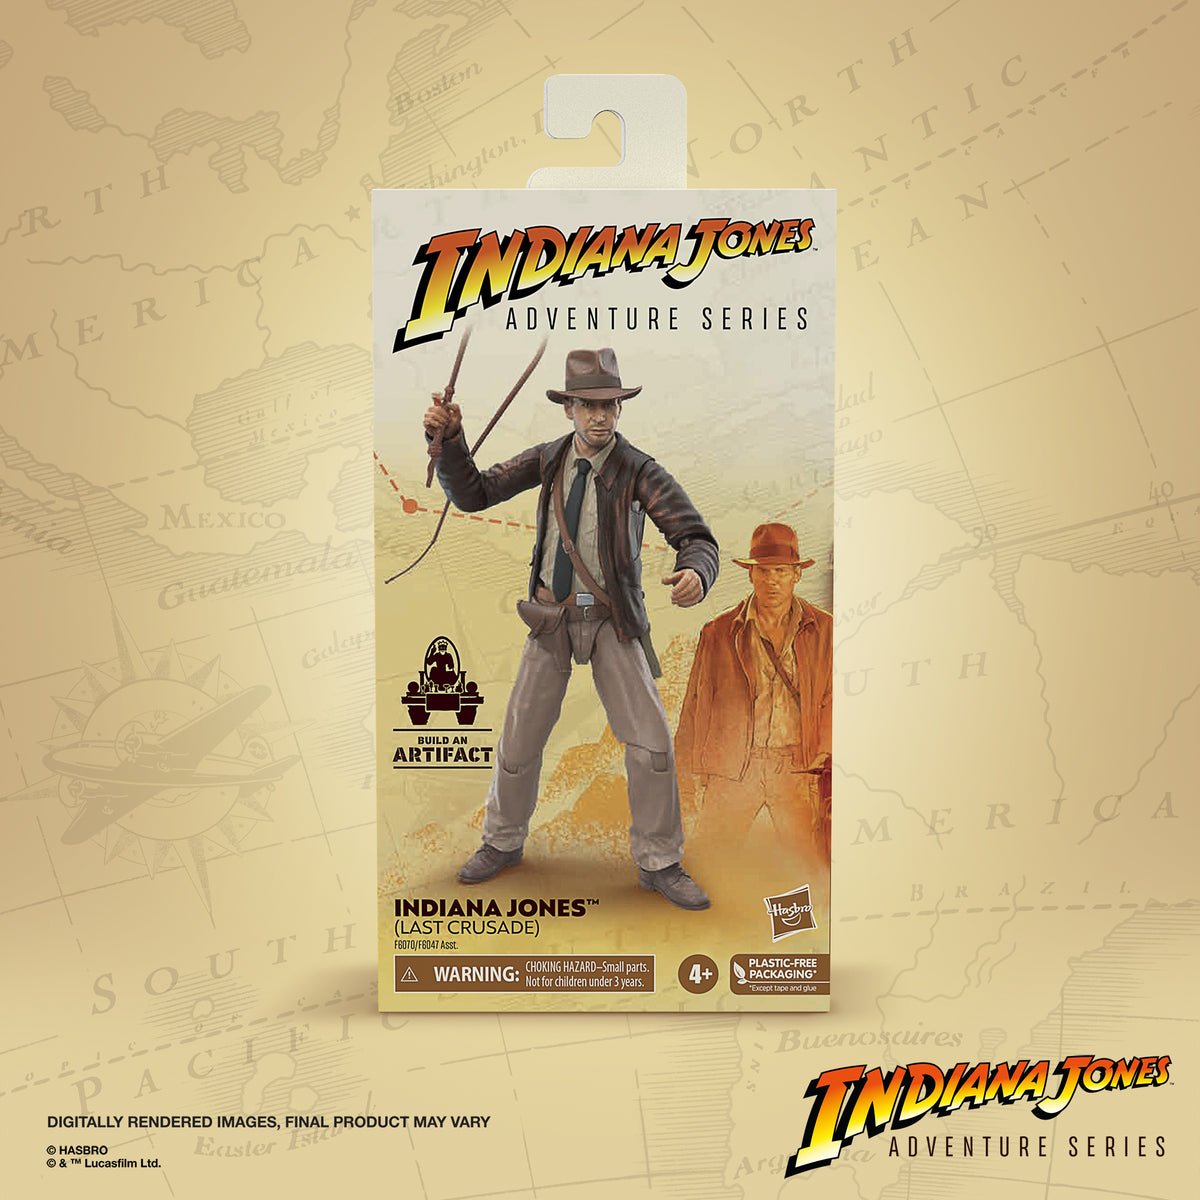 Indiana Jones Adventure Series Indiana Jones (Temple Escape) – Hasbro Pulse